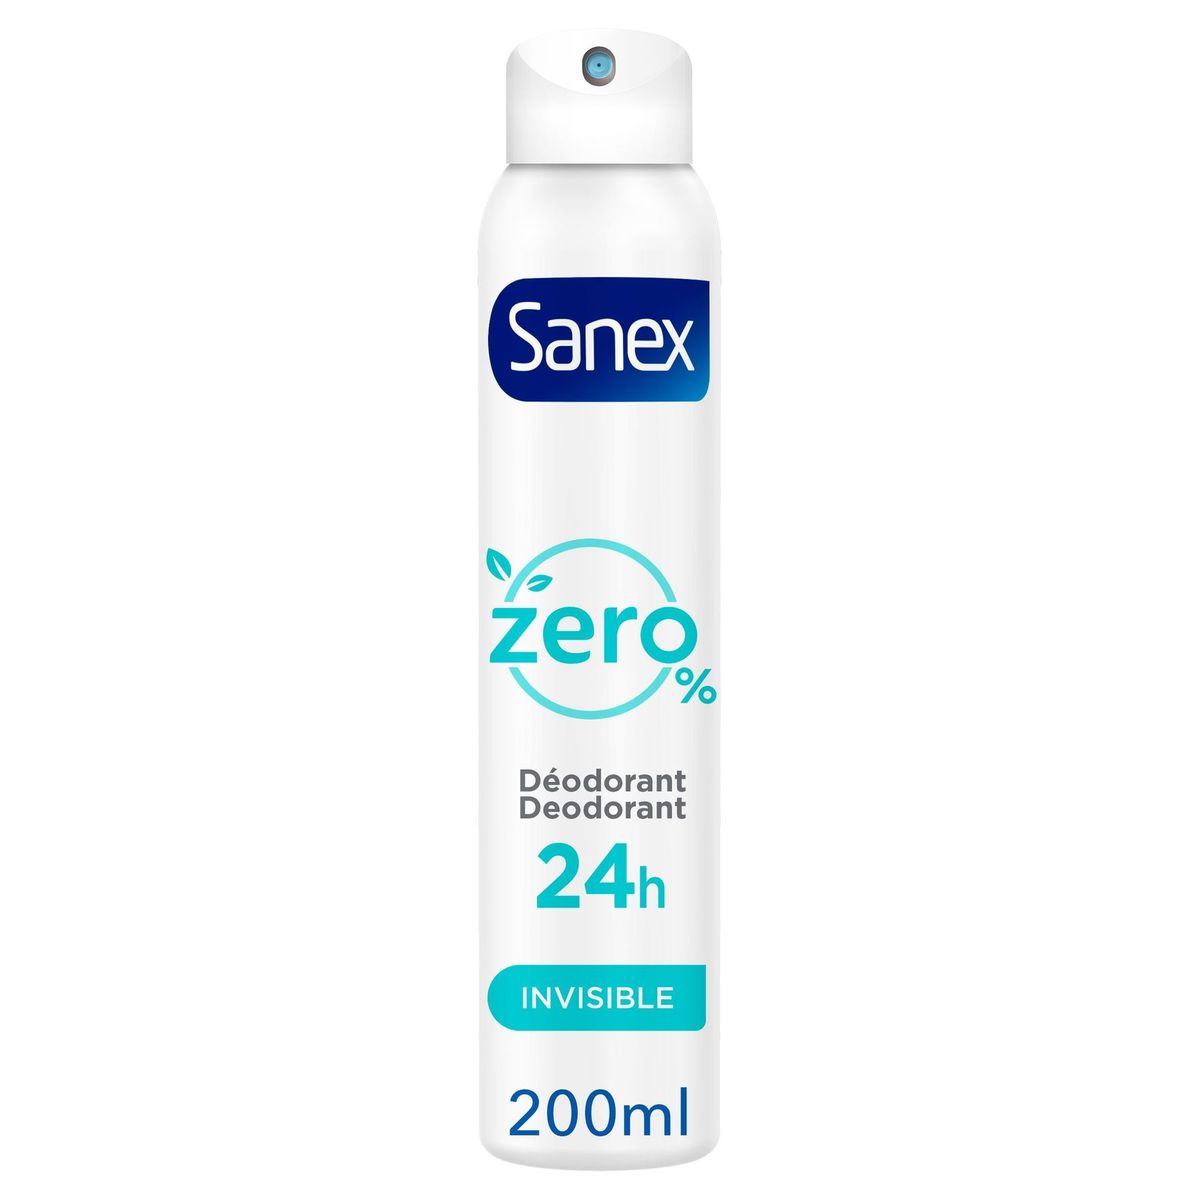 Sanex Zero% Invisible Deodorant Spray 200ml